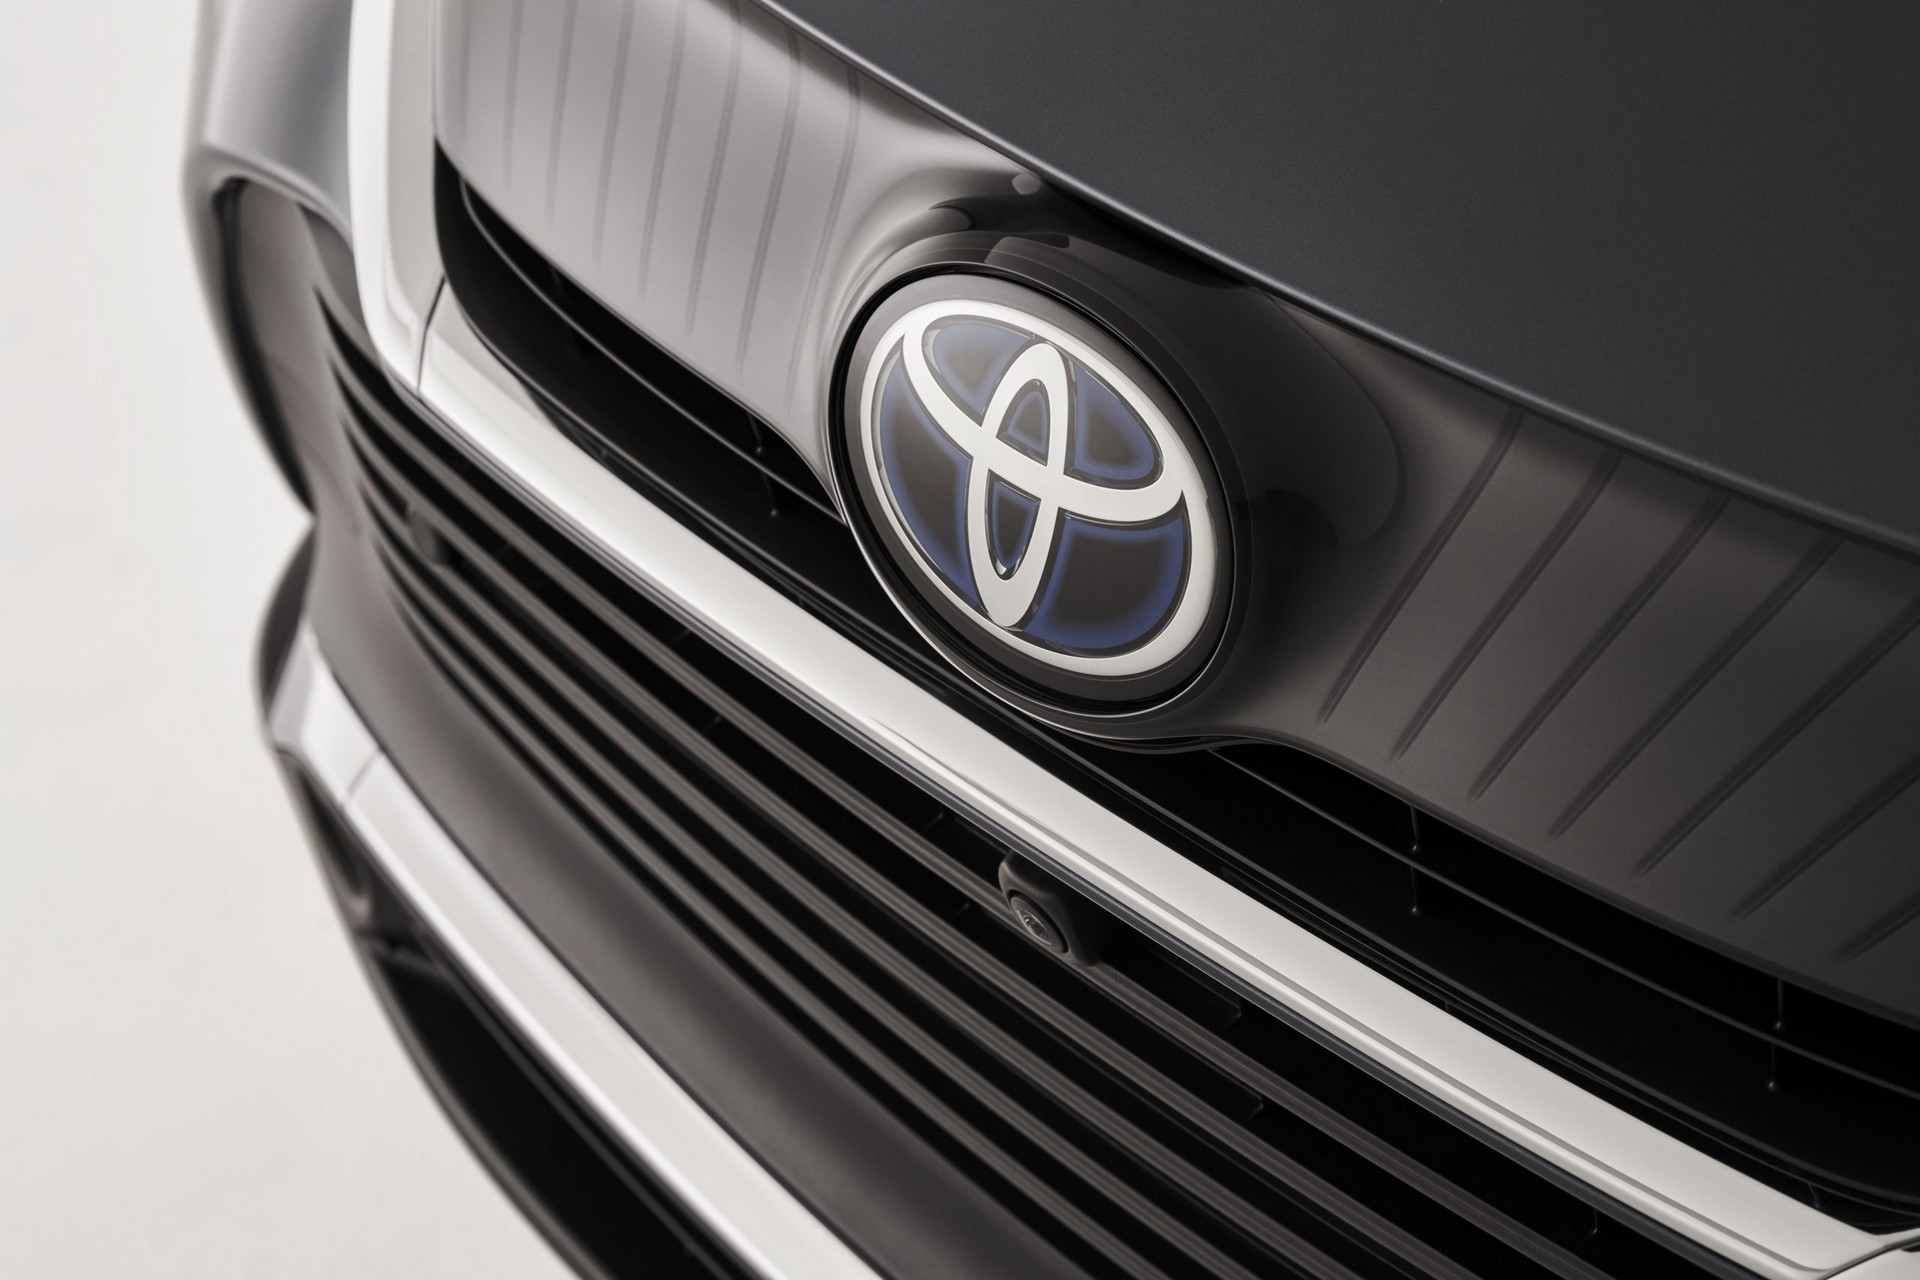 Toyota Venza 2021 คัมแบ็กพร้อมระบบไฮบริดครั้งแรก หลังหายหน้าหายตาไปกว่า 5 ปี